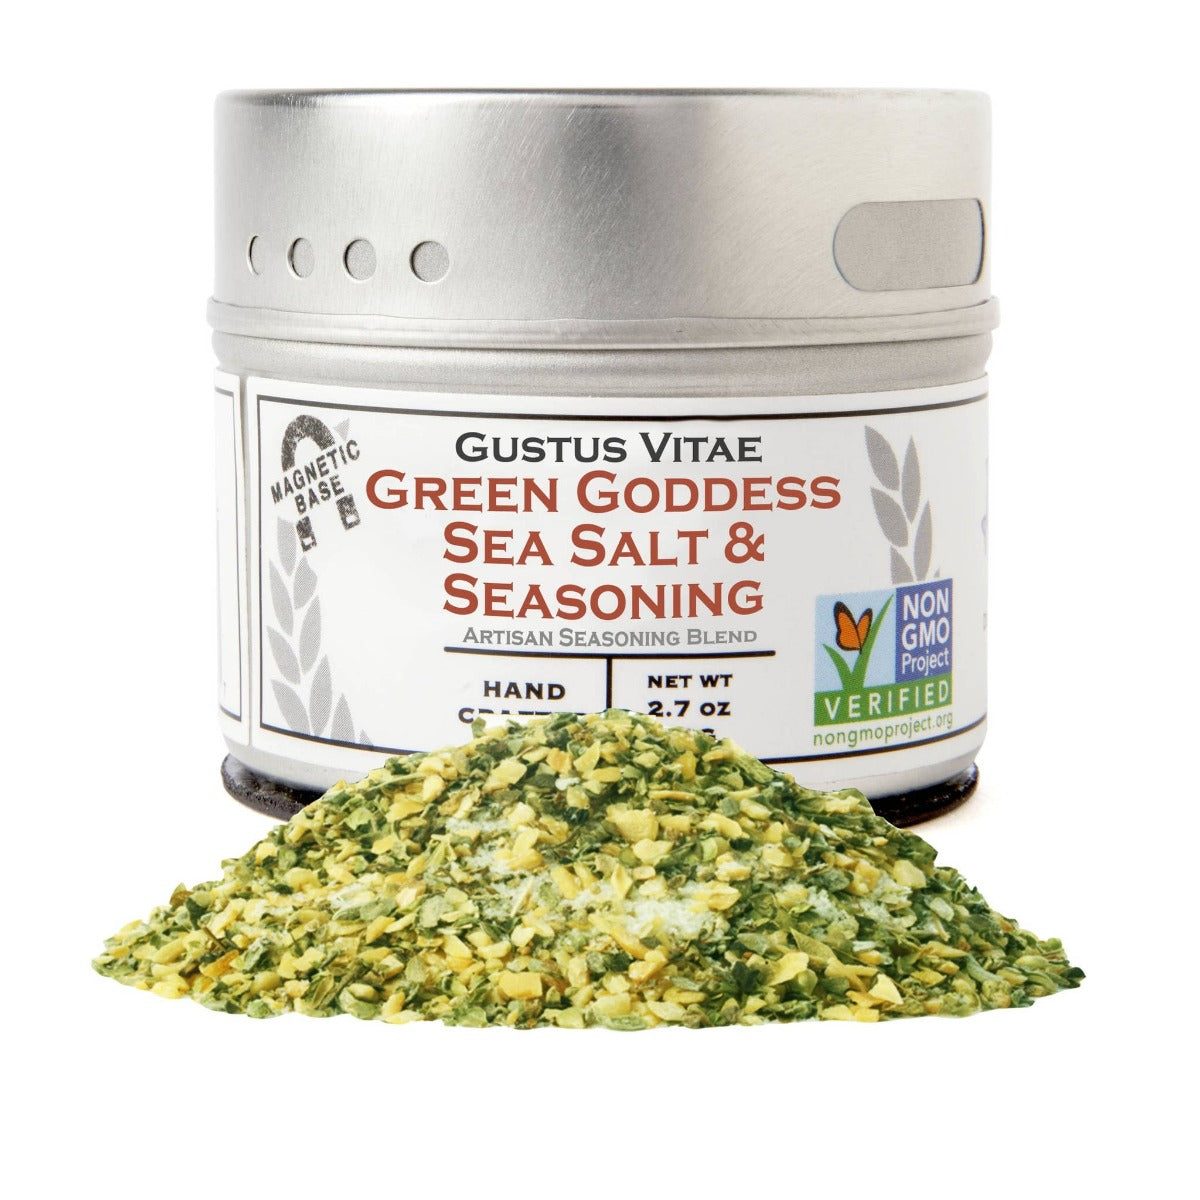 Green Goddess Sea salt and seasoning